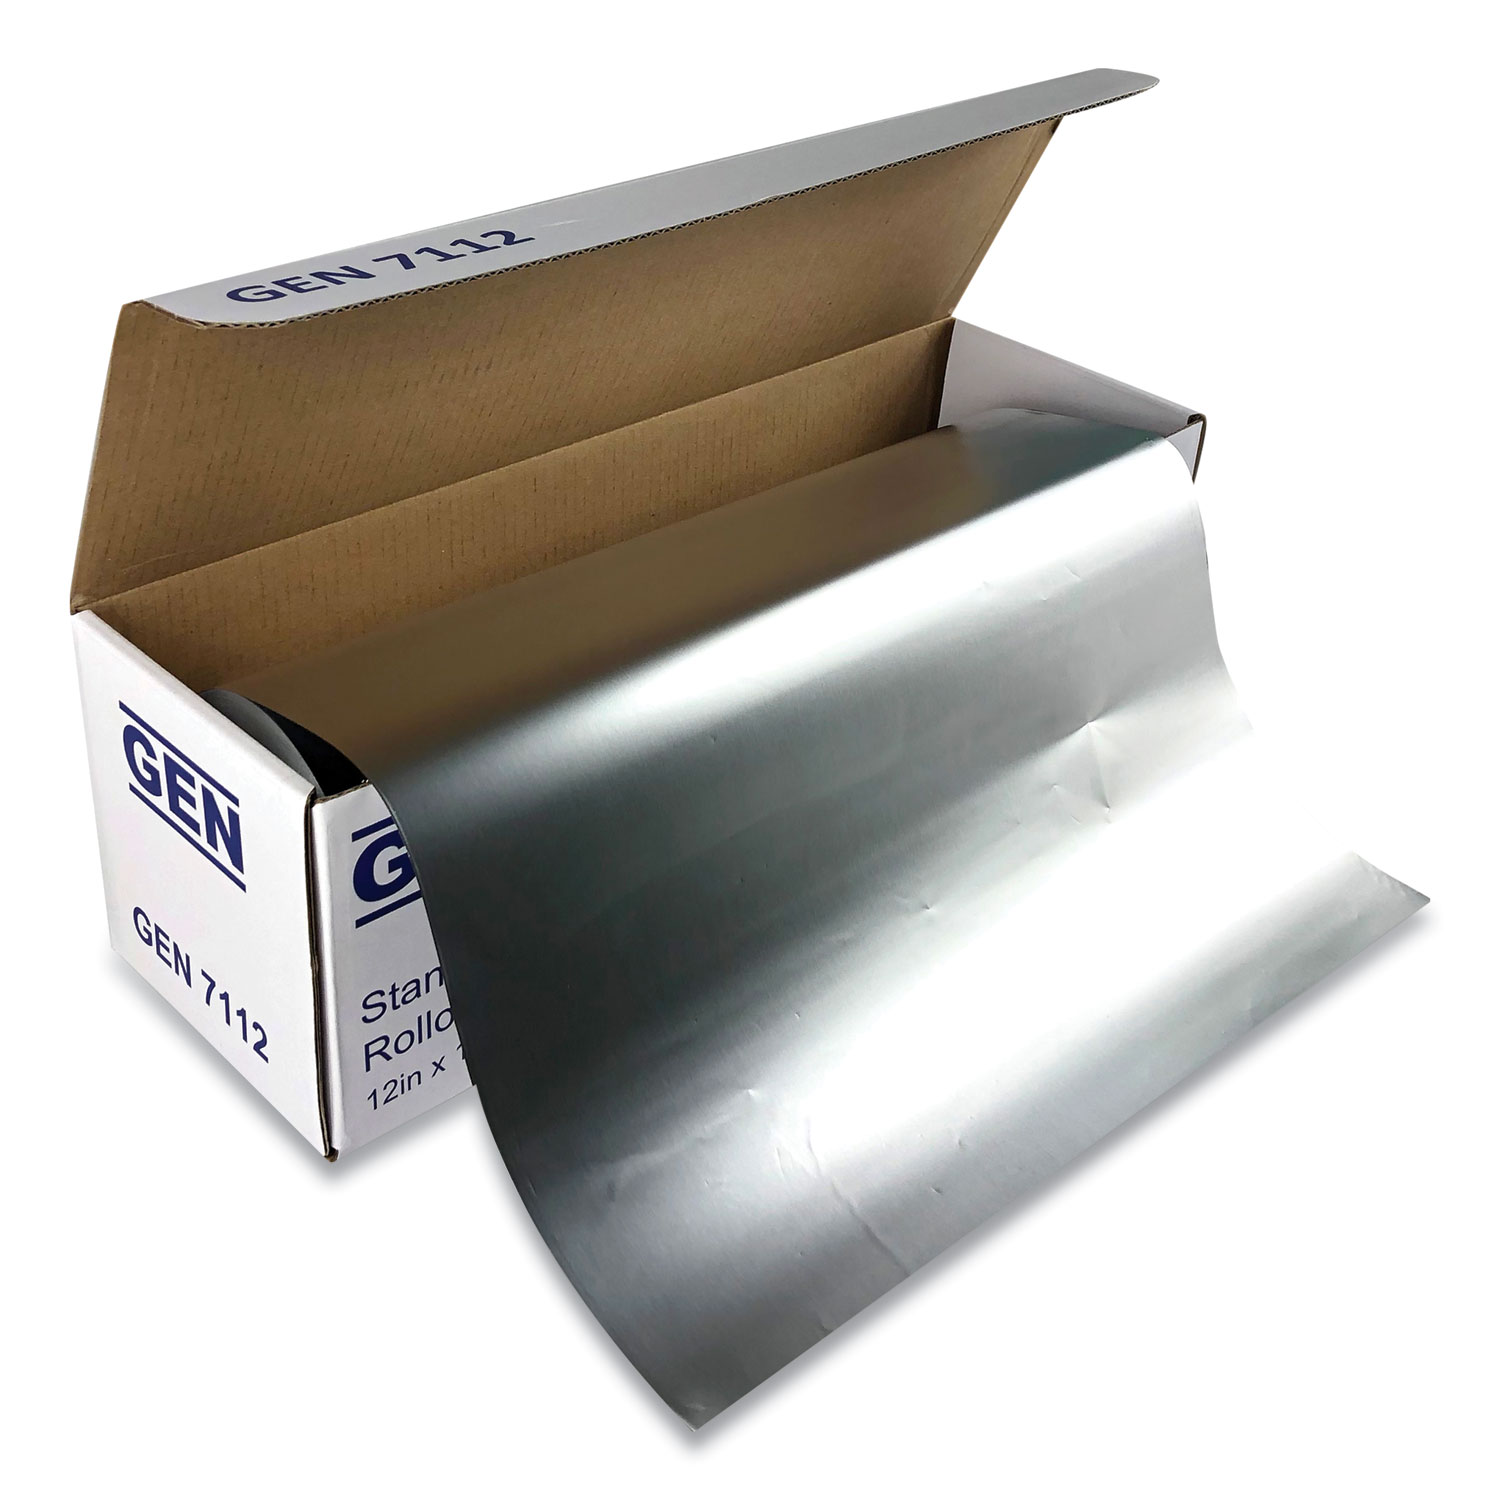 Karat 12x 1000' Standard Aluminum Foil Roll - Case of 1 Roll